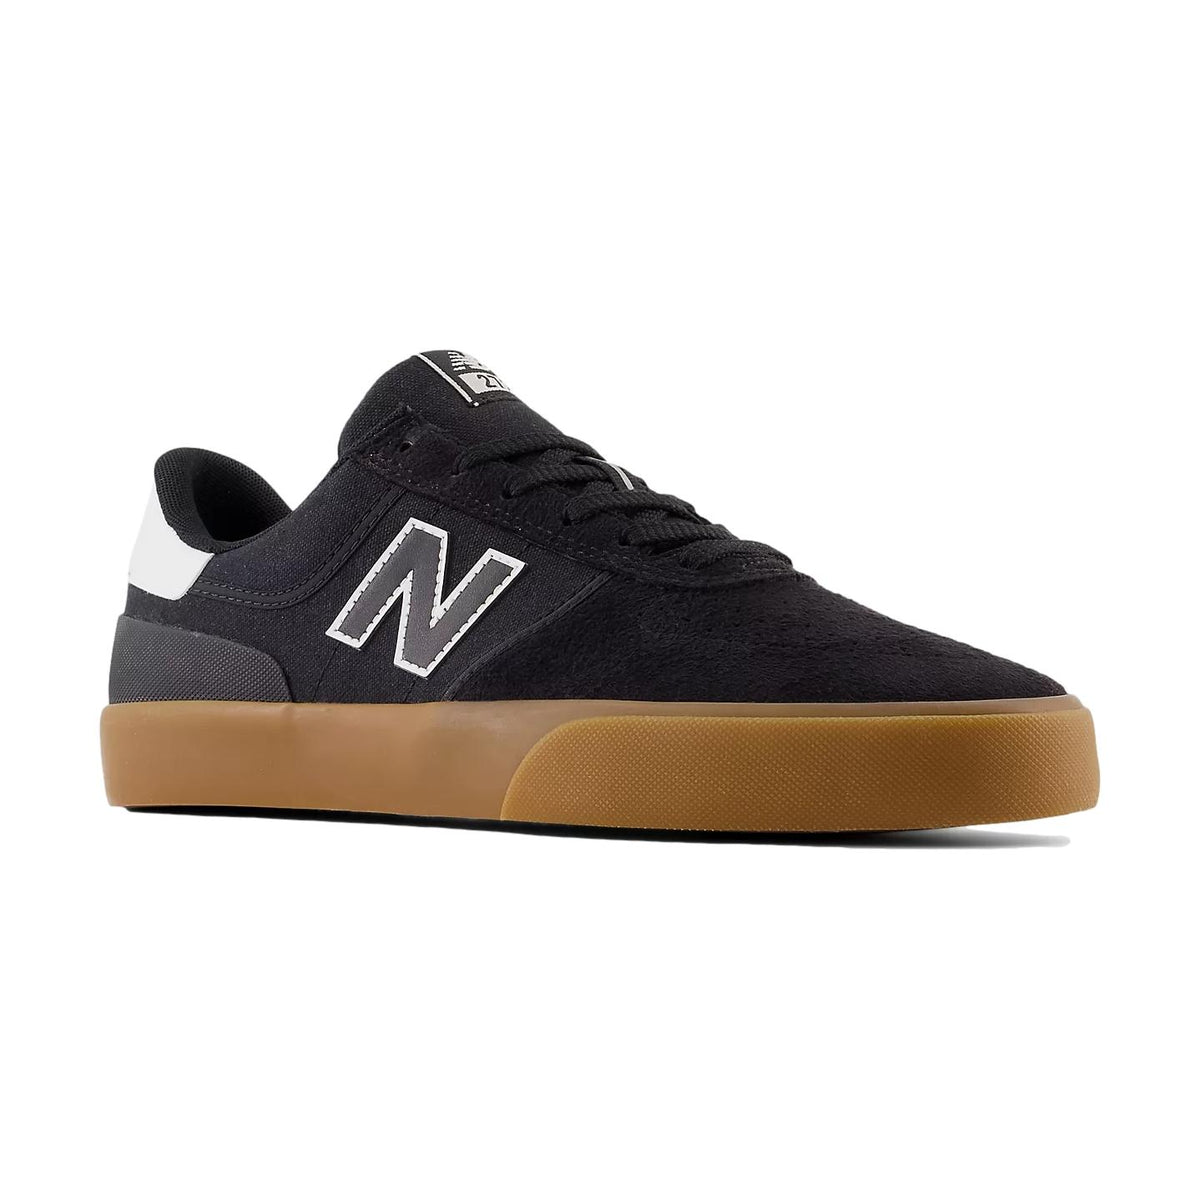 New Balance 272 Black/White/Gum - Venue Skateboards